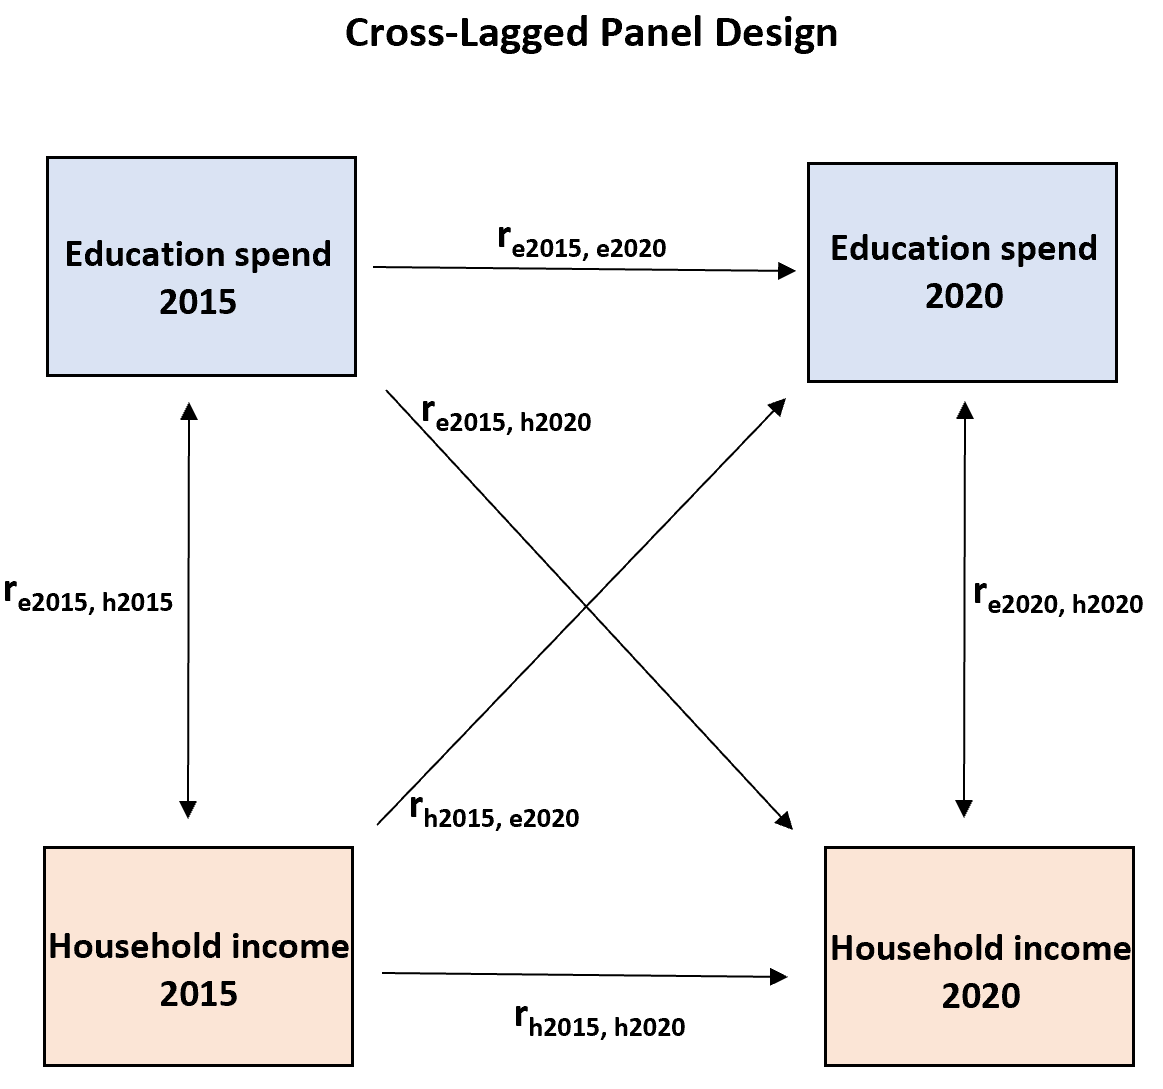 Cross-lagged panel design